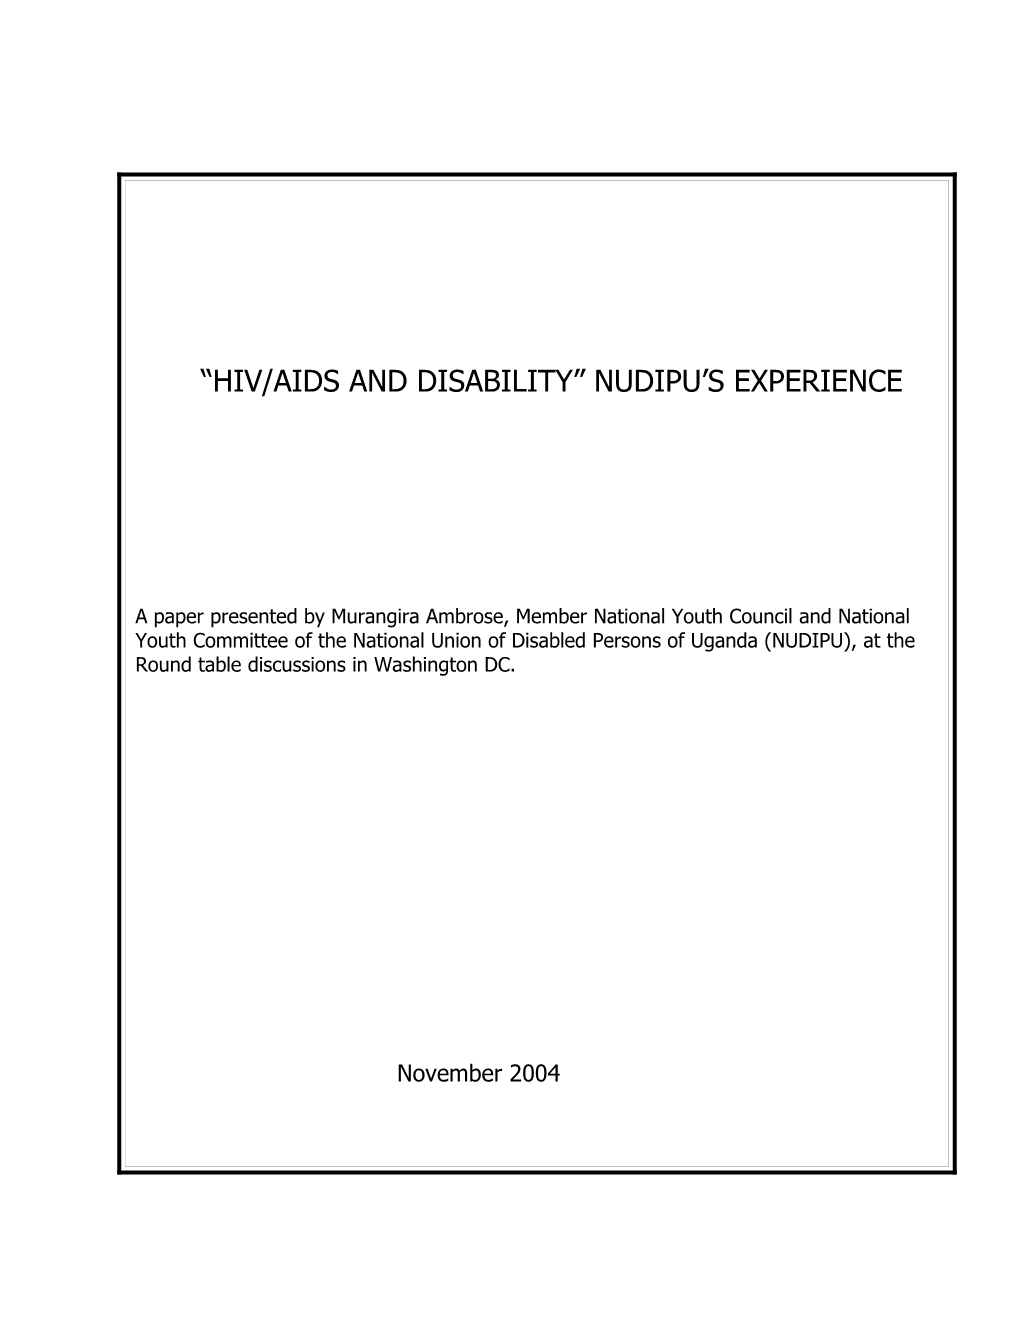 1.0 Background on NUDIPU and HIV/AIDS